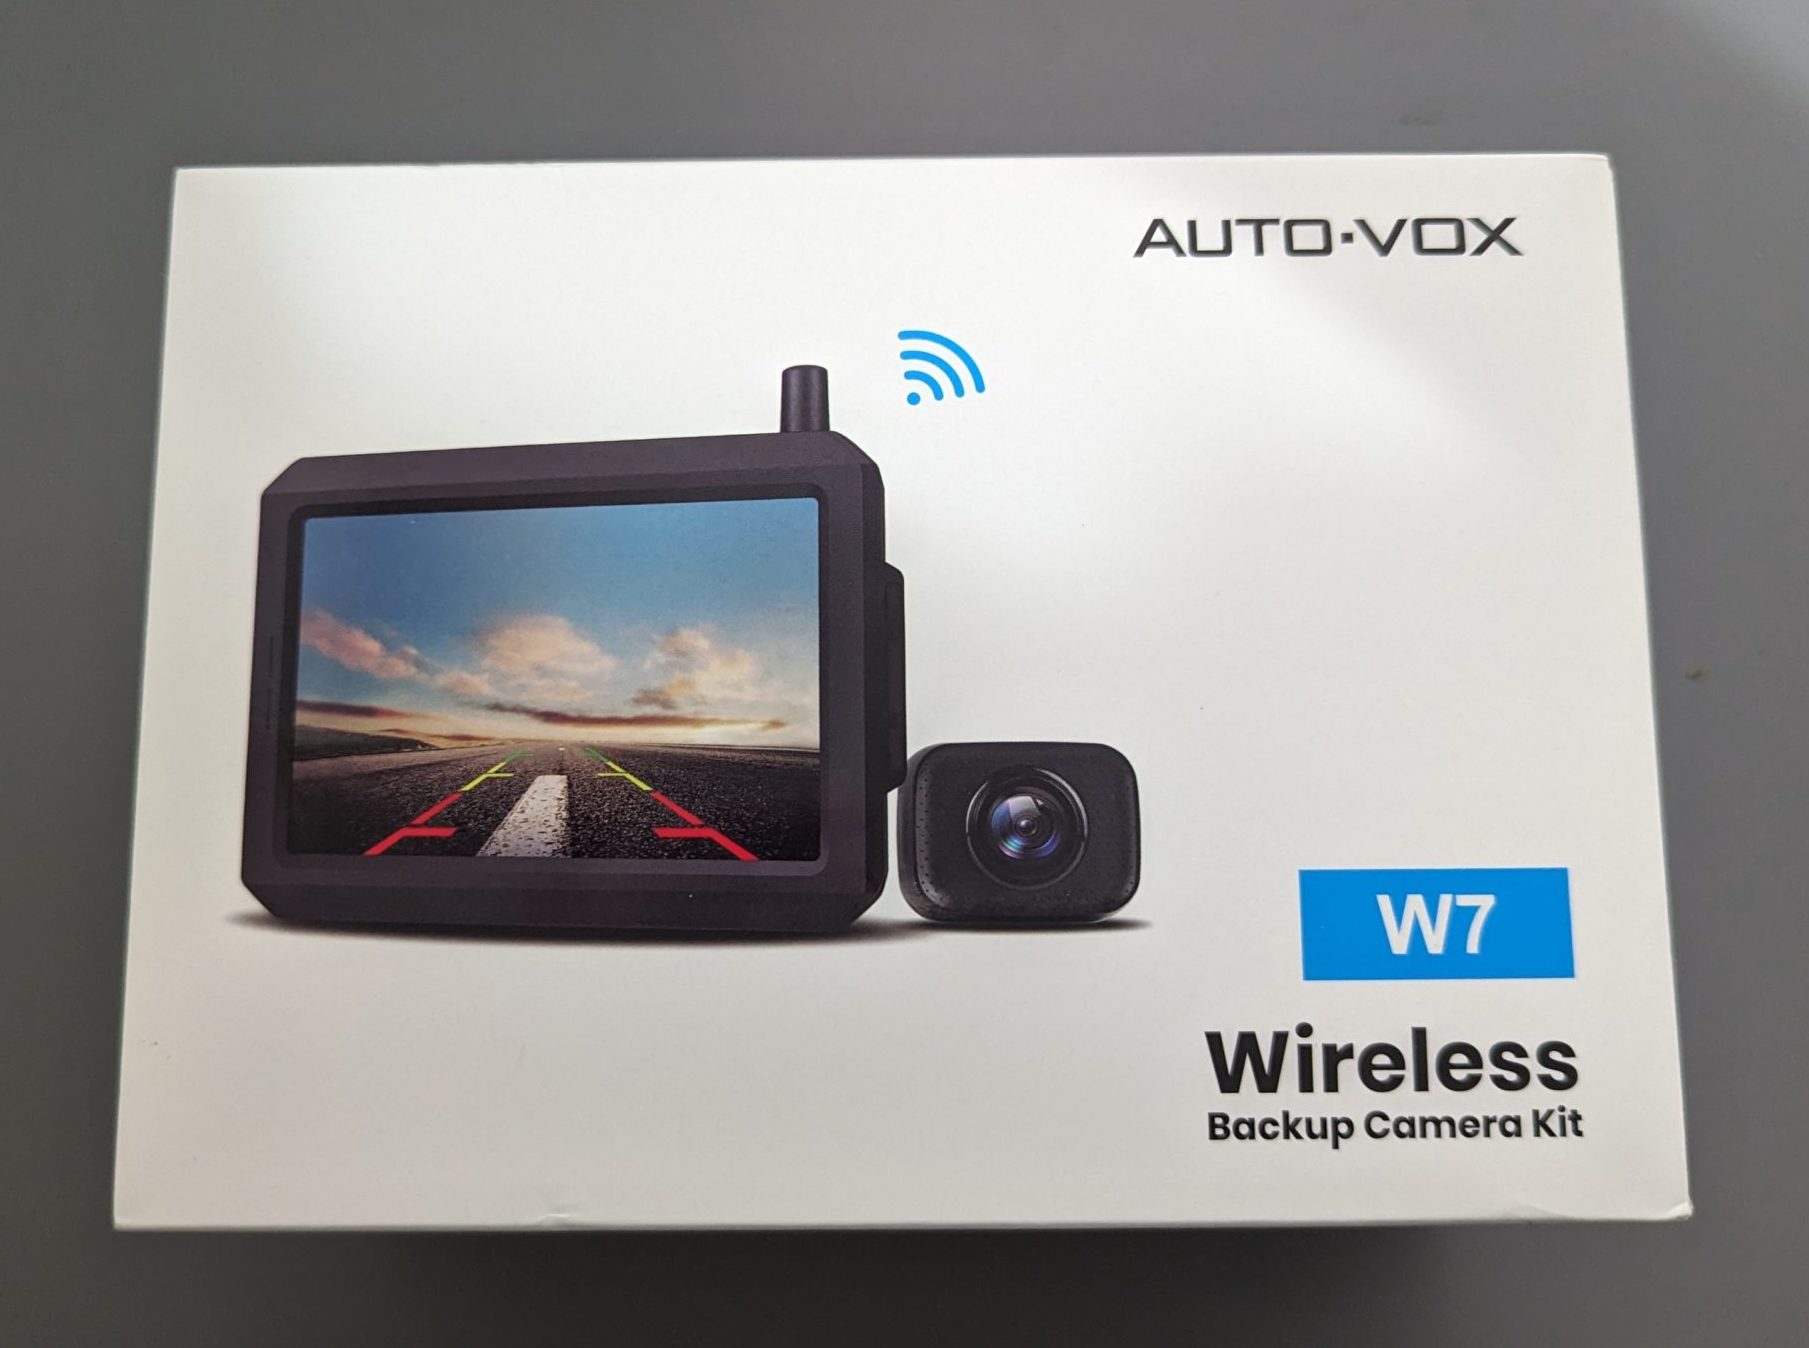 AUTO-VOX W7 Wireless Backup Camera Kit Review 